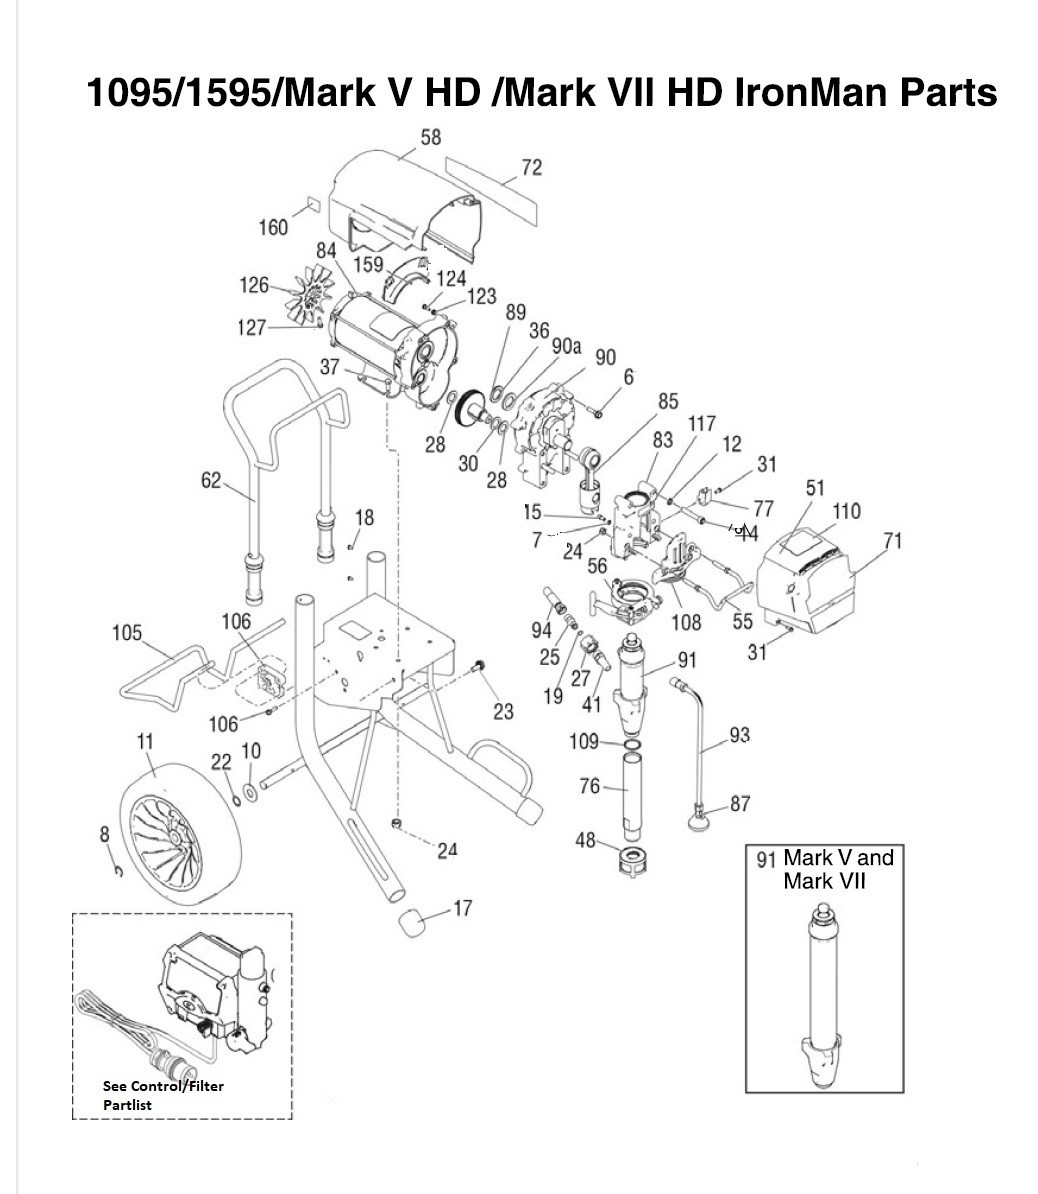 Graco Mark V HD IronMan Sprayer Parts